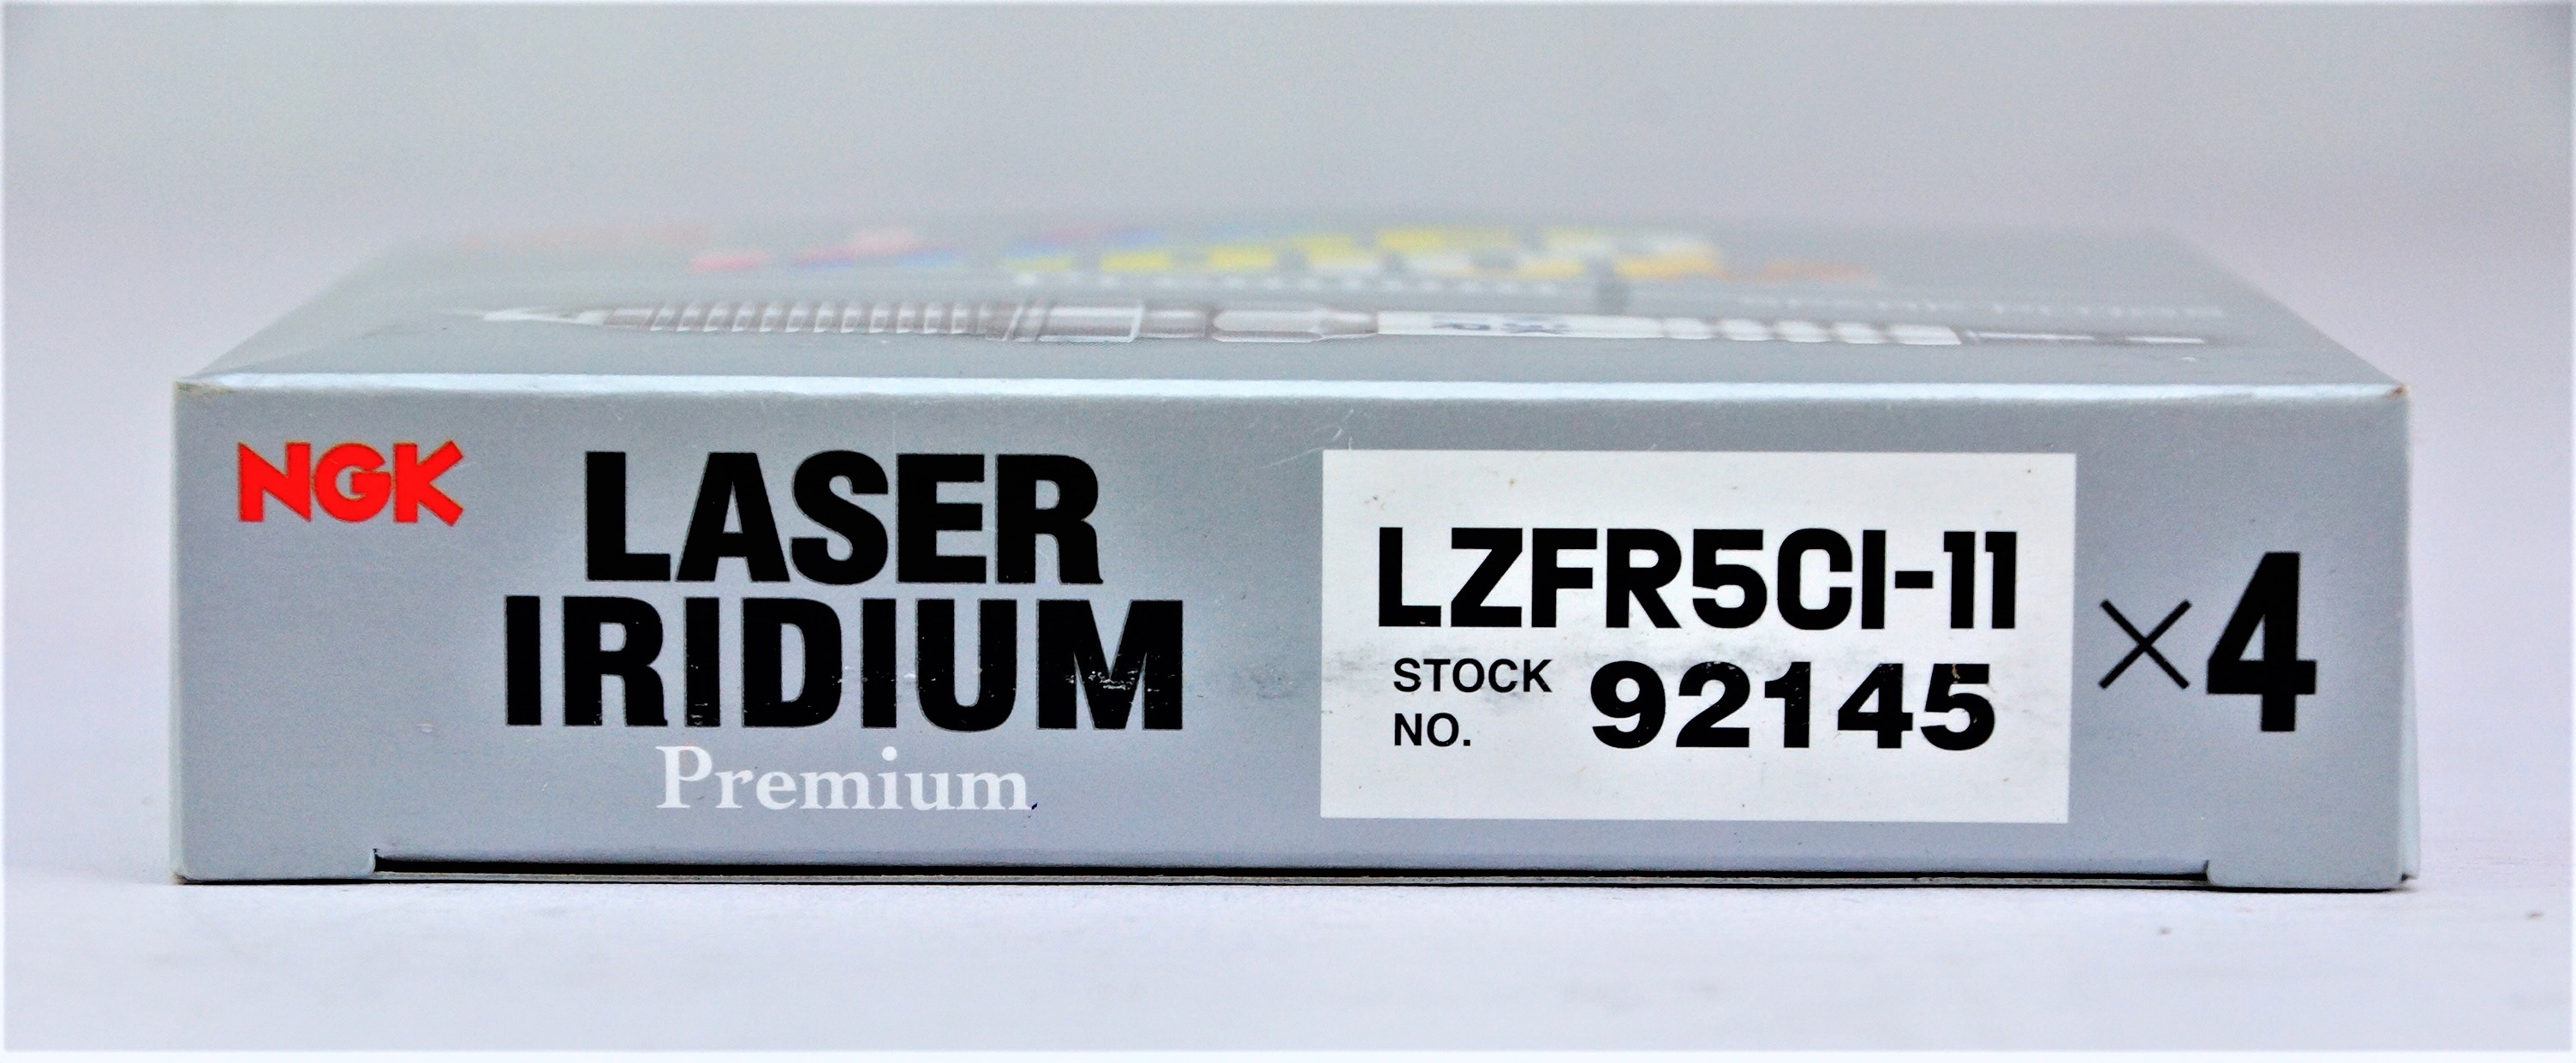 Pack of 16 - New Genuine NGK 92145 Laser Iridium Spark Plug Fast Free Shipping - image 9